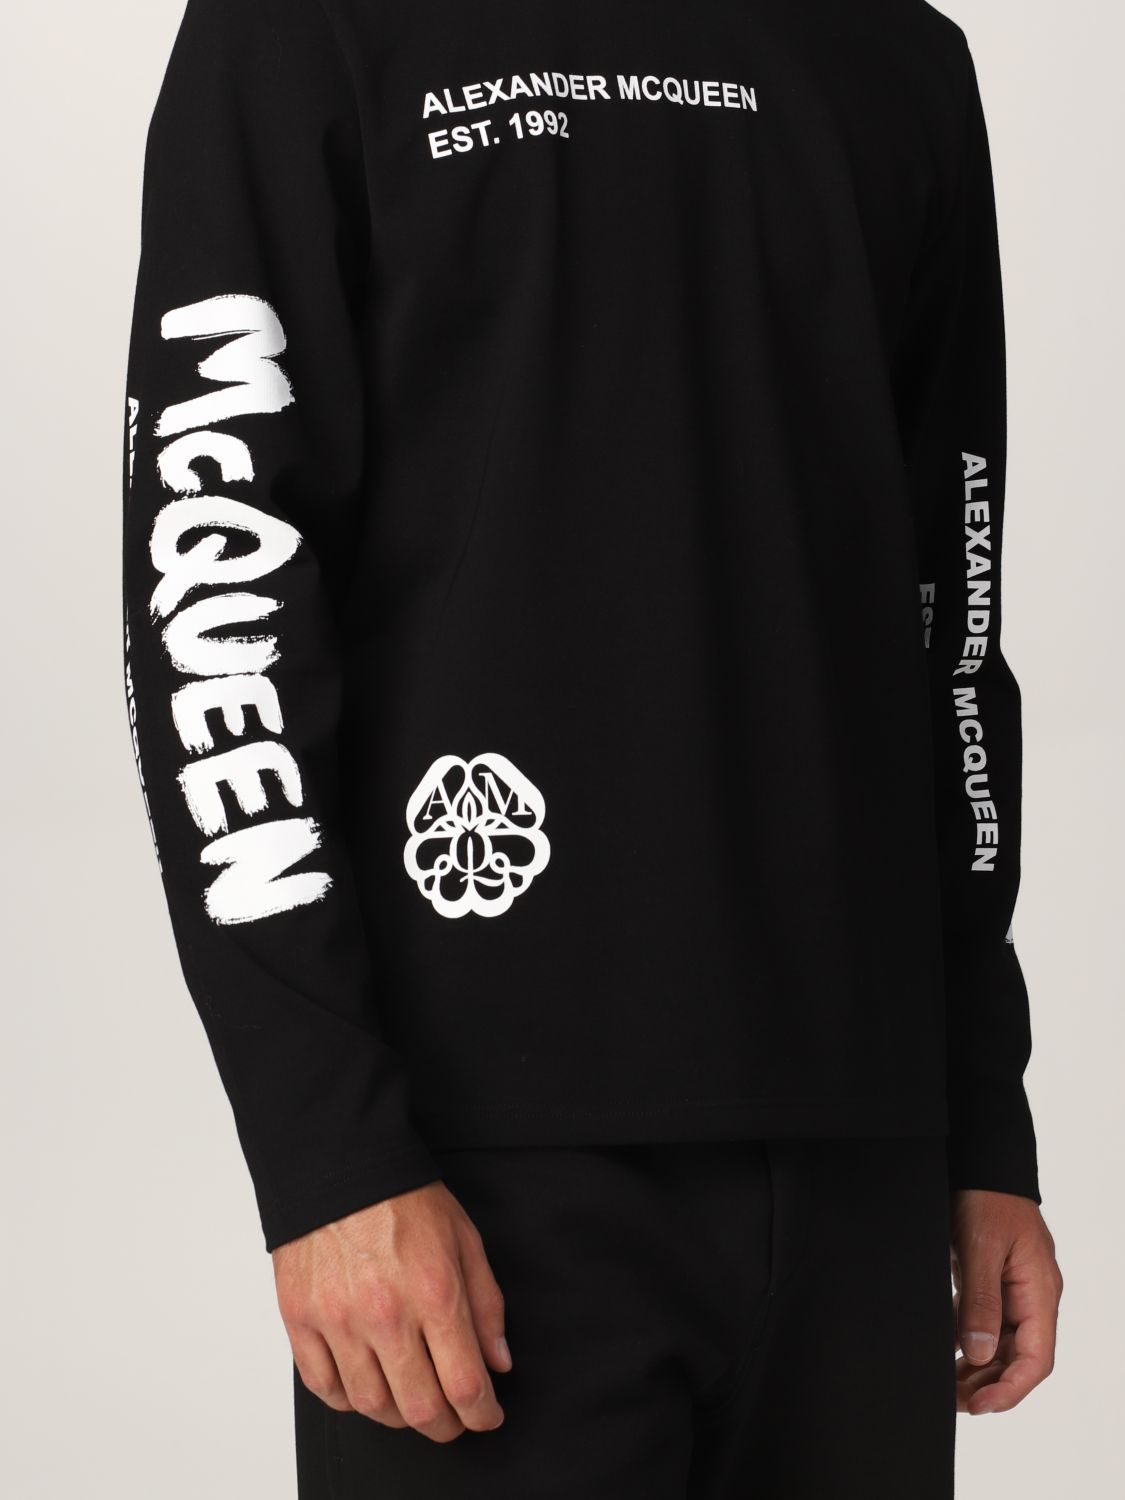 Alexander McQueen T-shirt with typographic skull print